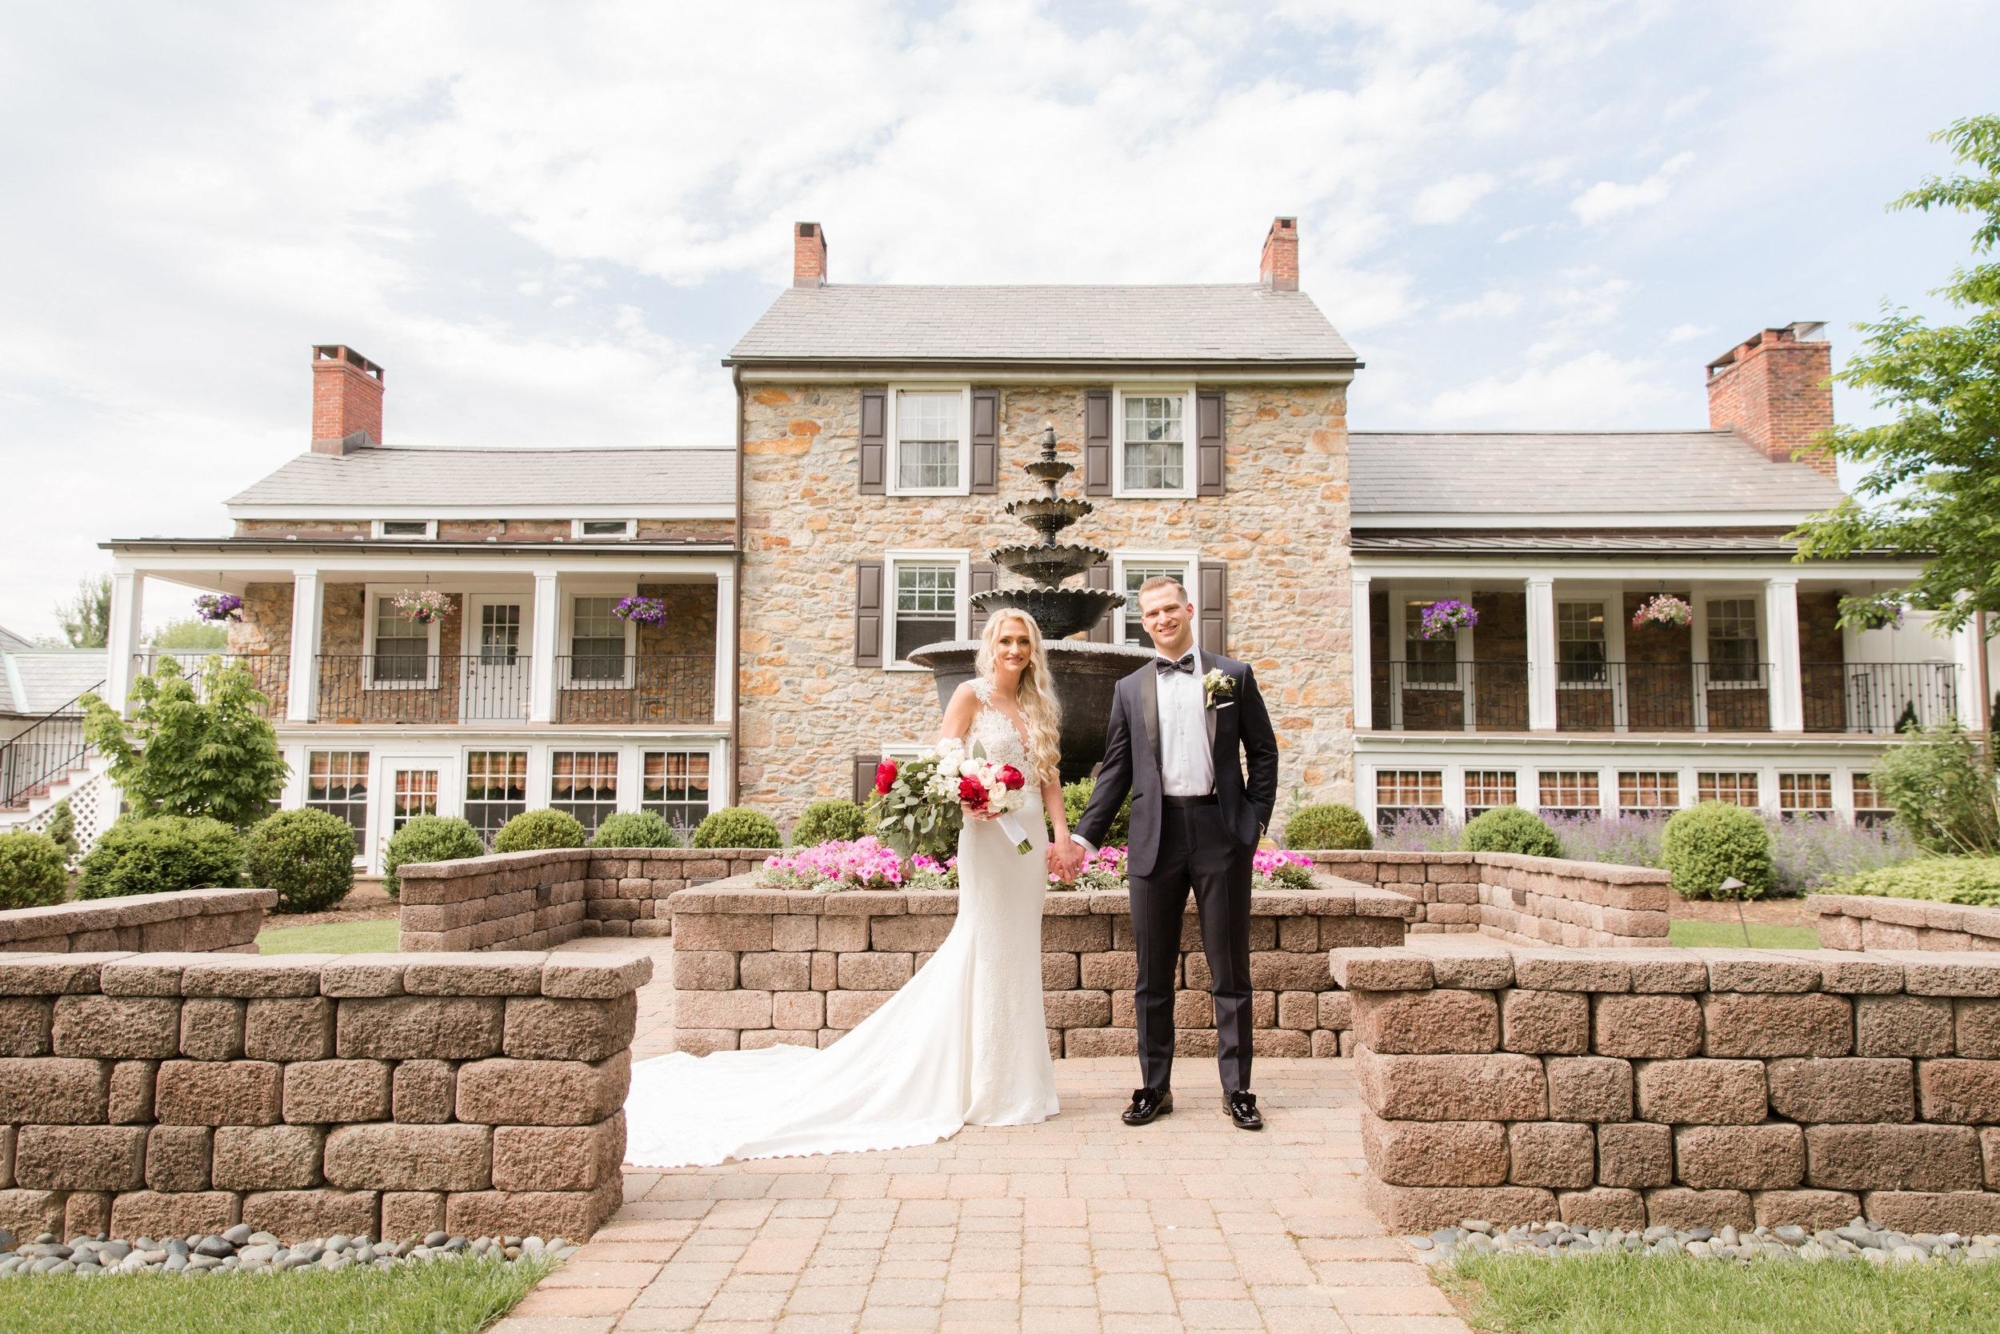 Plan a Wedding at The Farmhouse in Hamilton, NJ